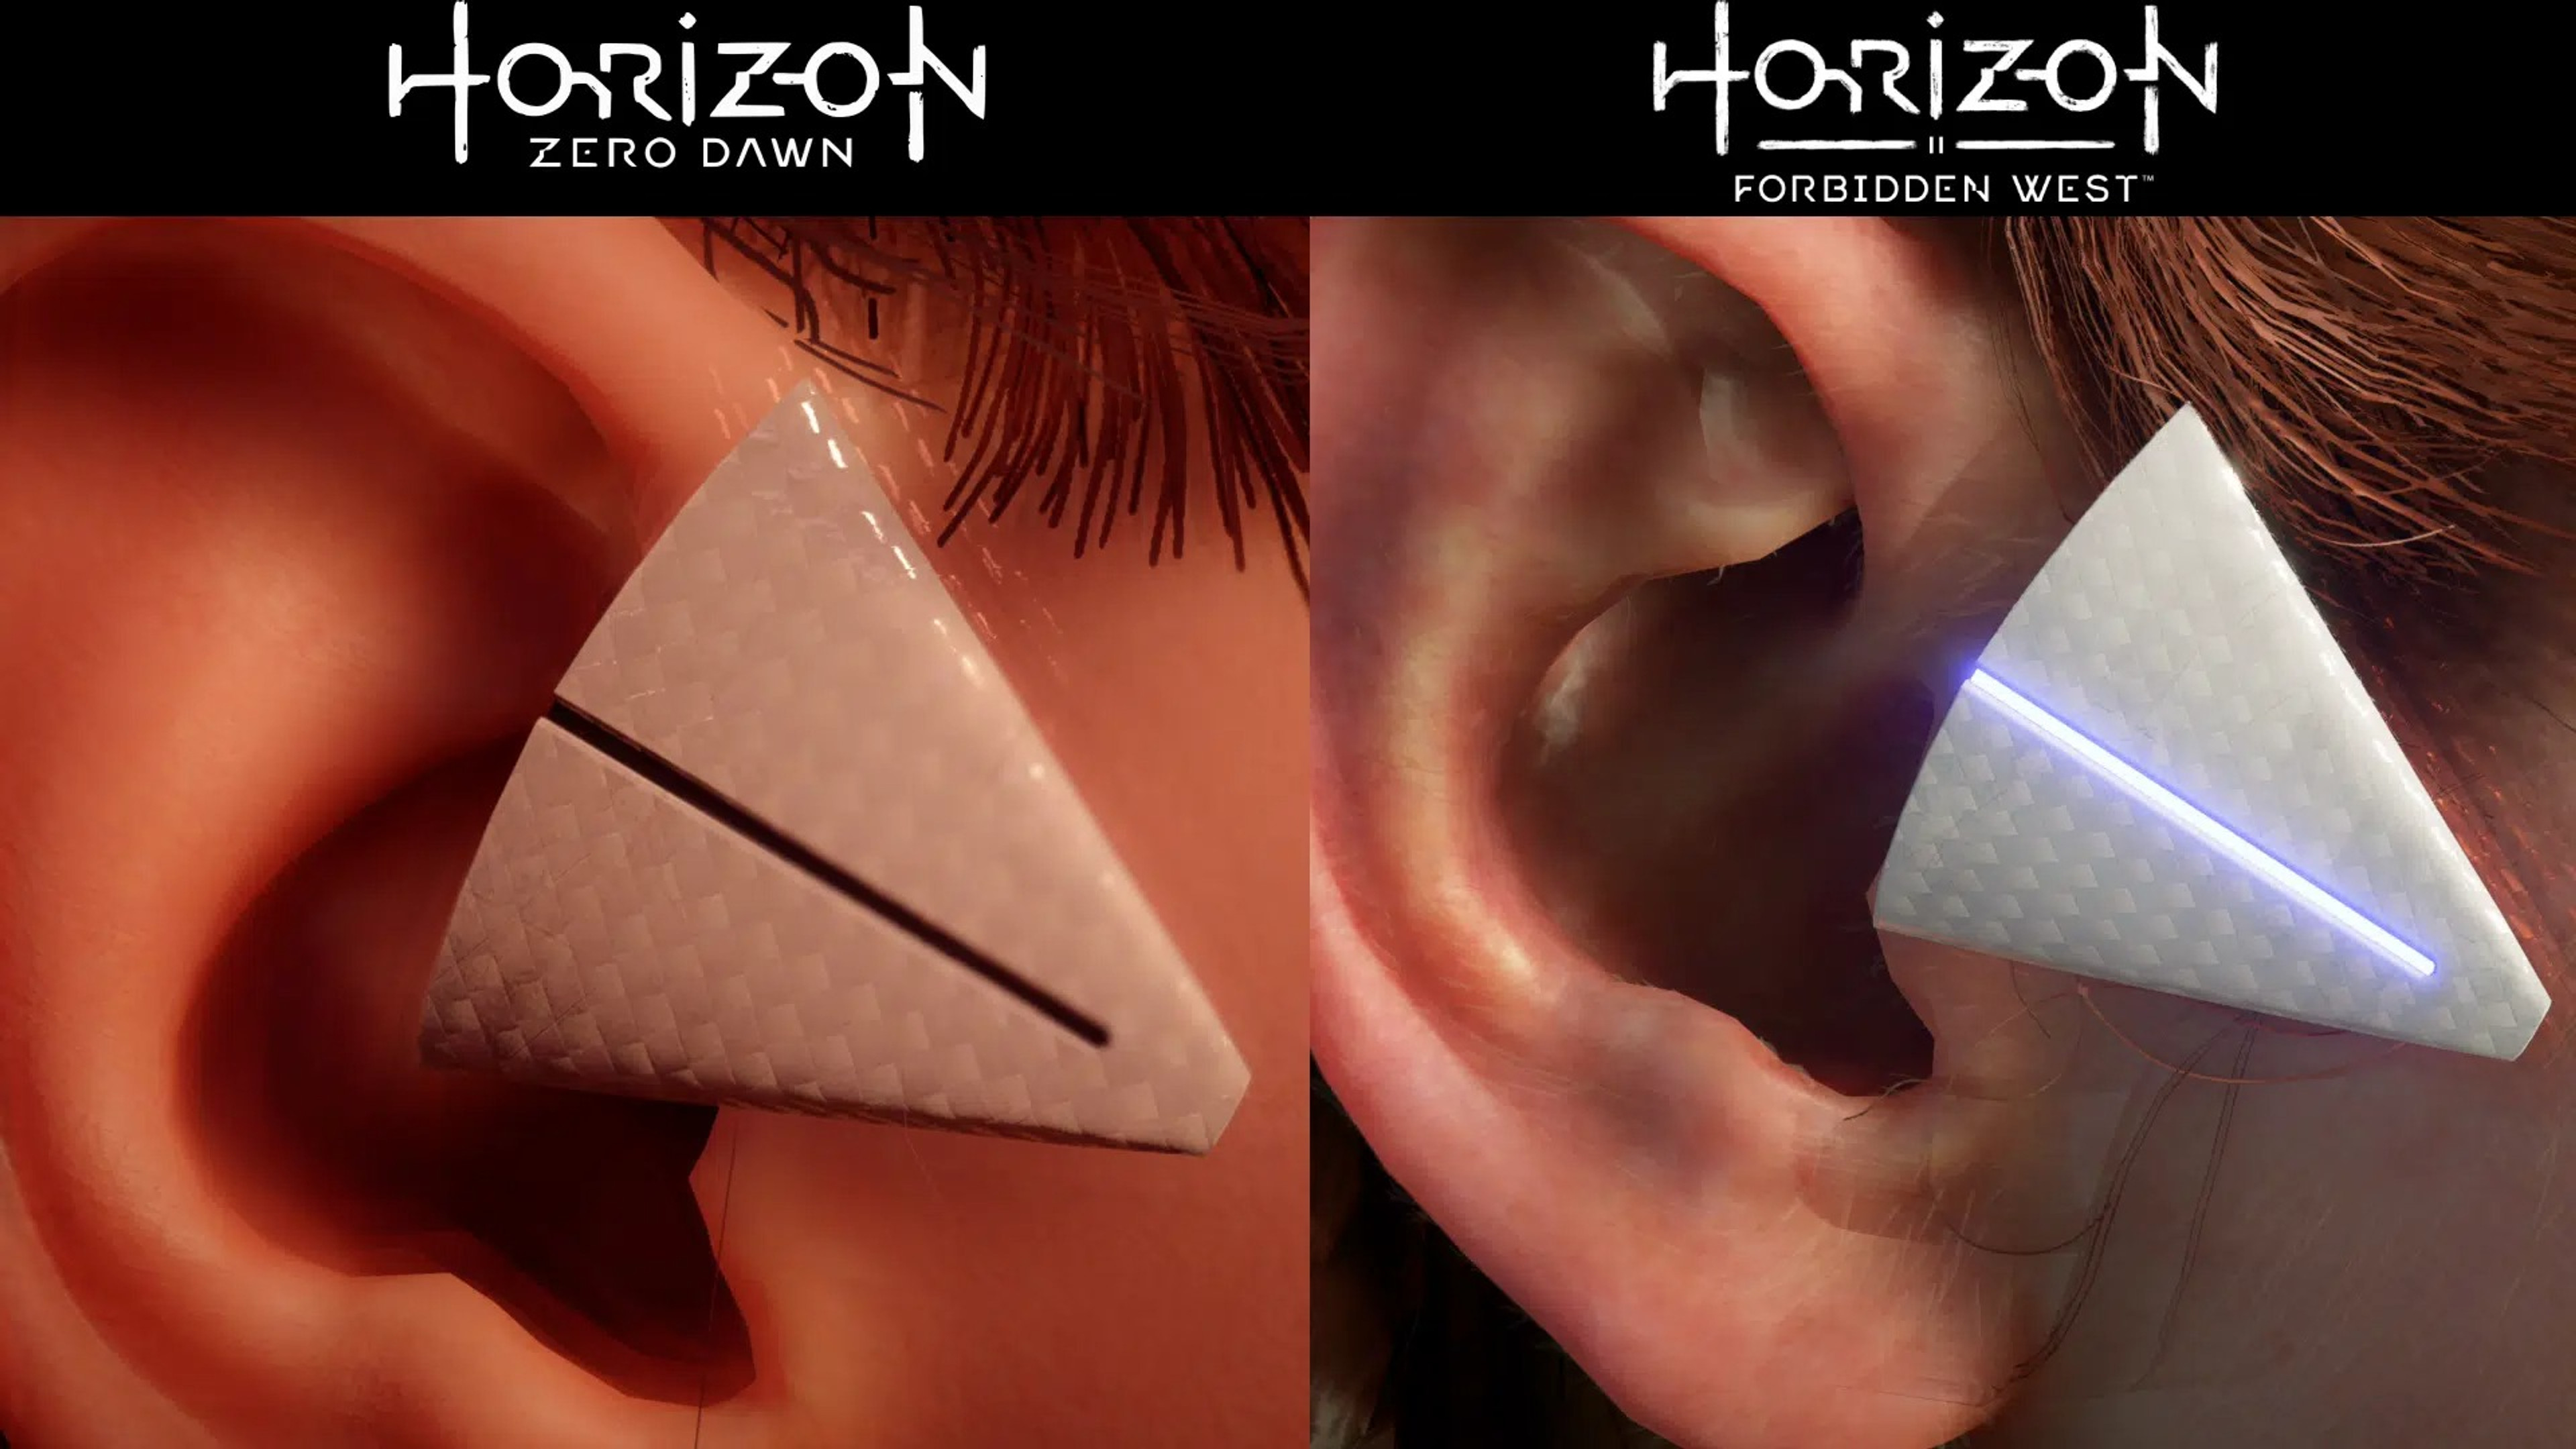 horizon-forbidden-west-vs-horizon-zero-dawn-comparison-4